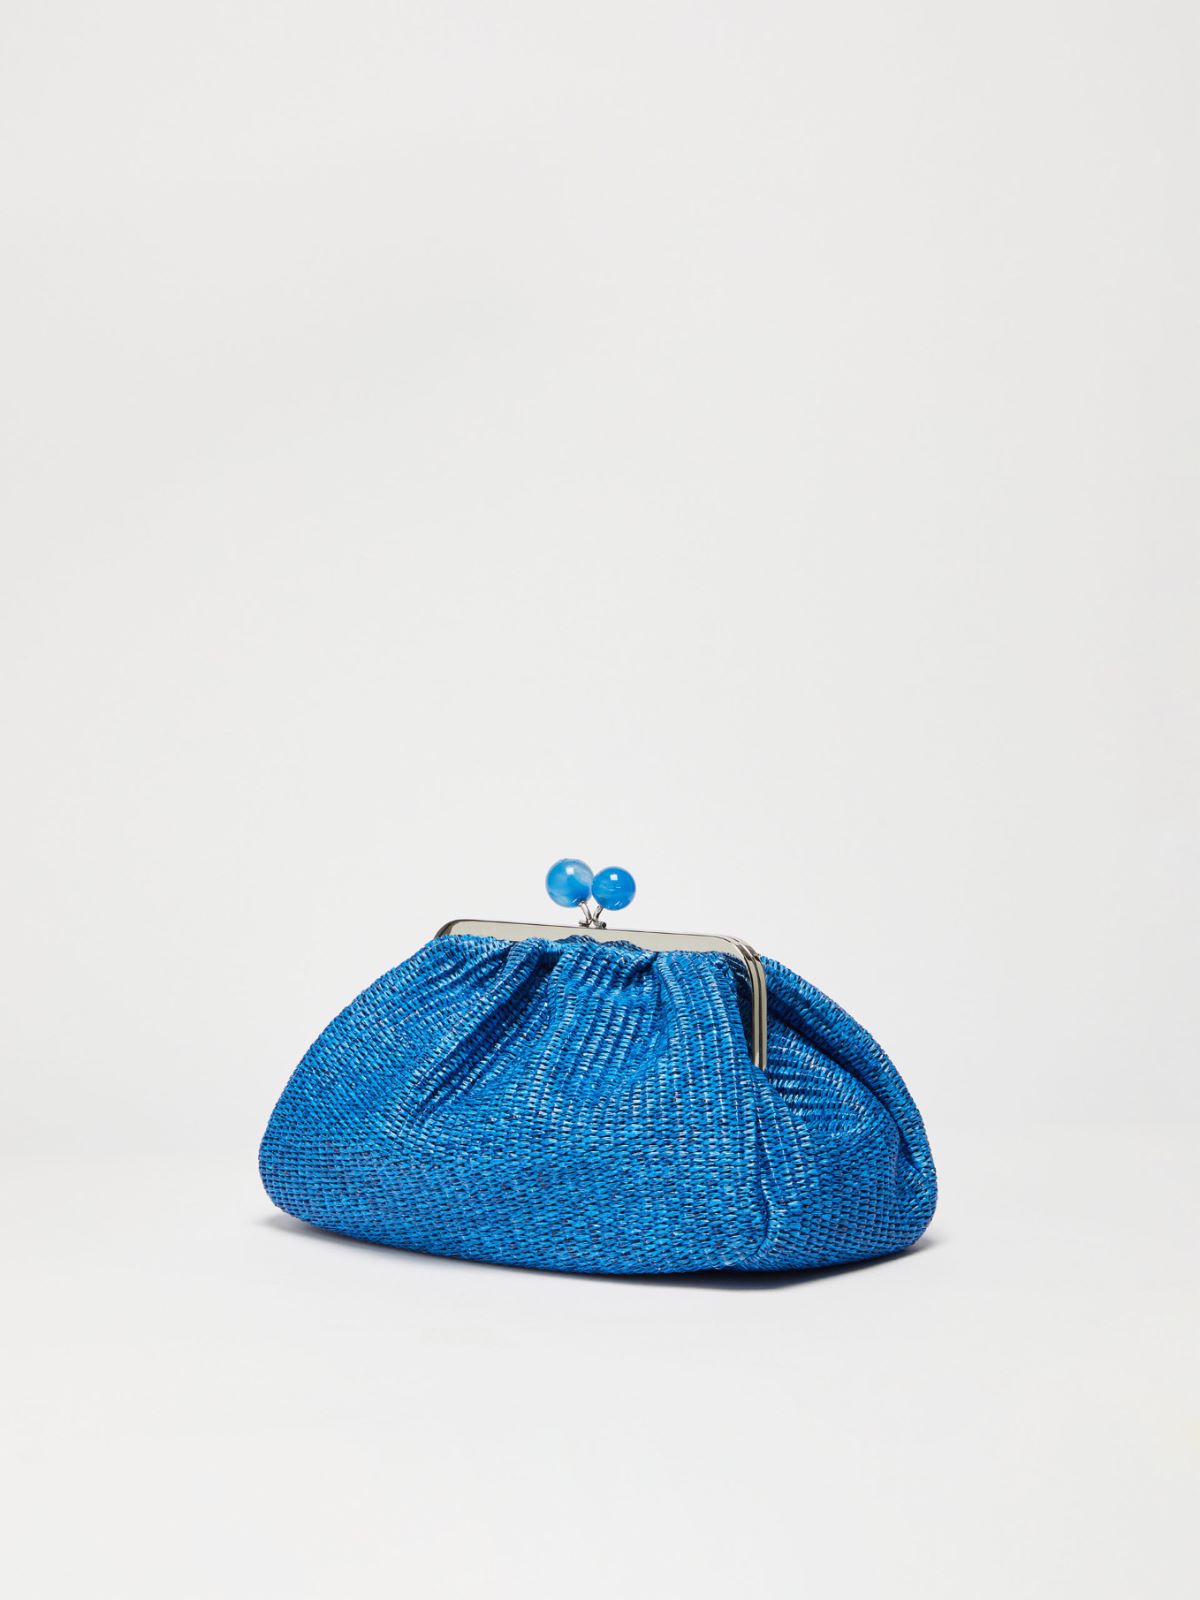 Medium Pasticcino Bag in raffia - CORNFLOWER BLUE - Weekend Max Mara - 2